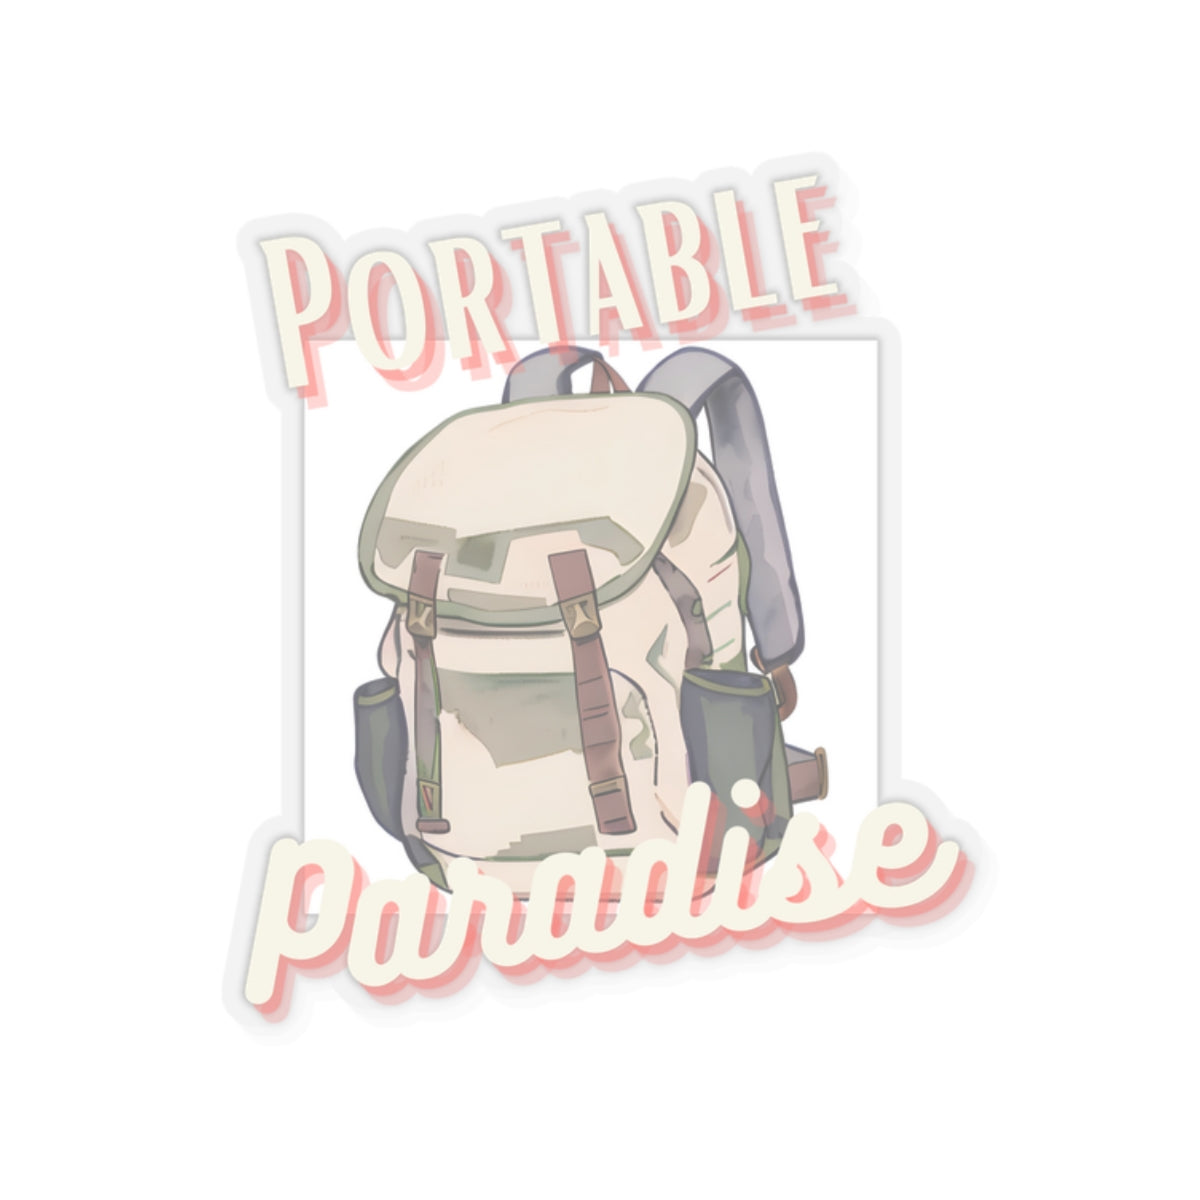 "Portable Paradise" Sticker